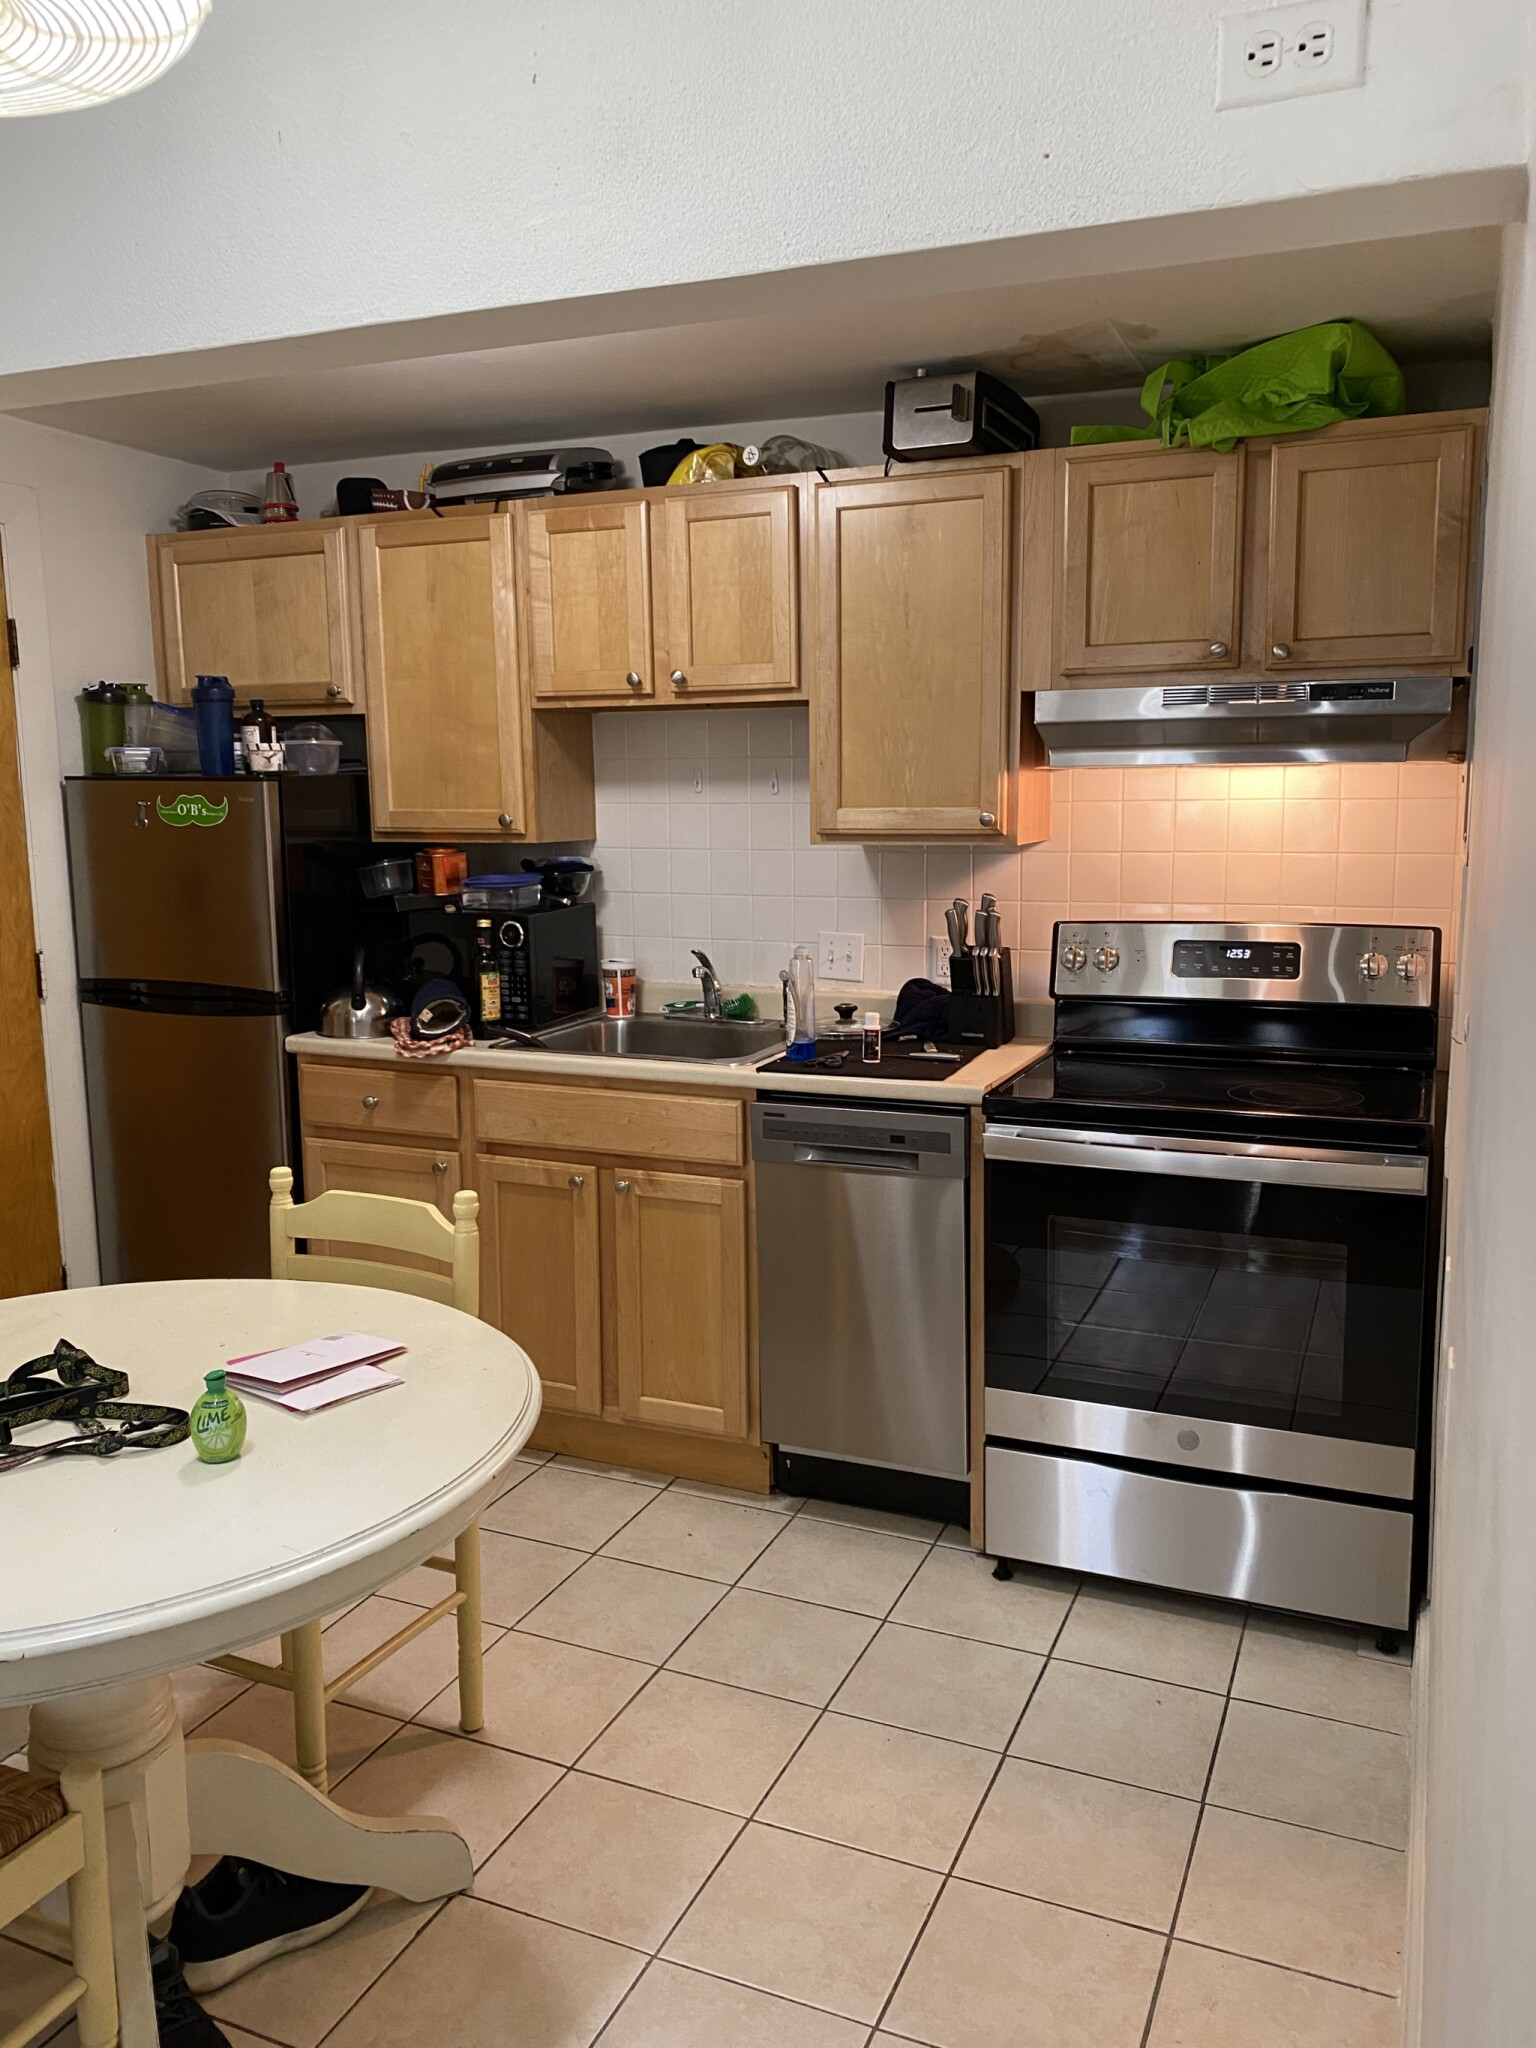 Photos of apartment on Englewood Ave.,Boston MA 02135